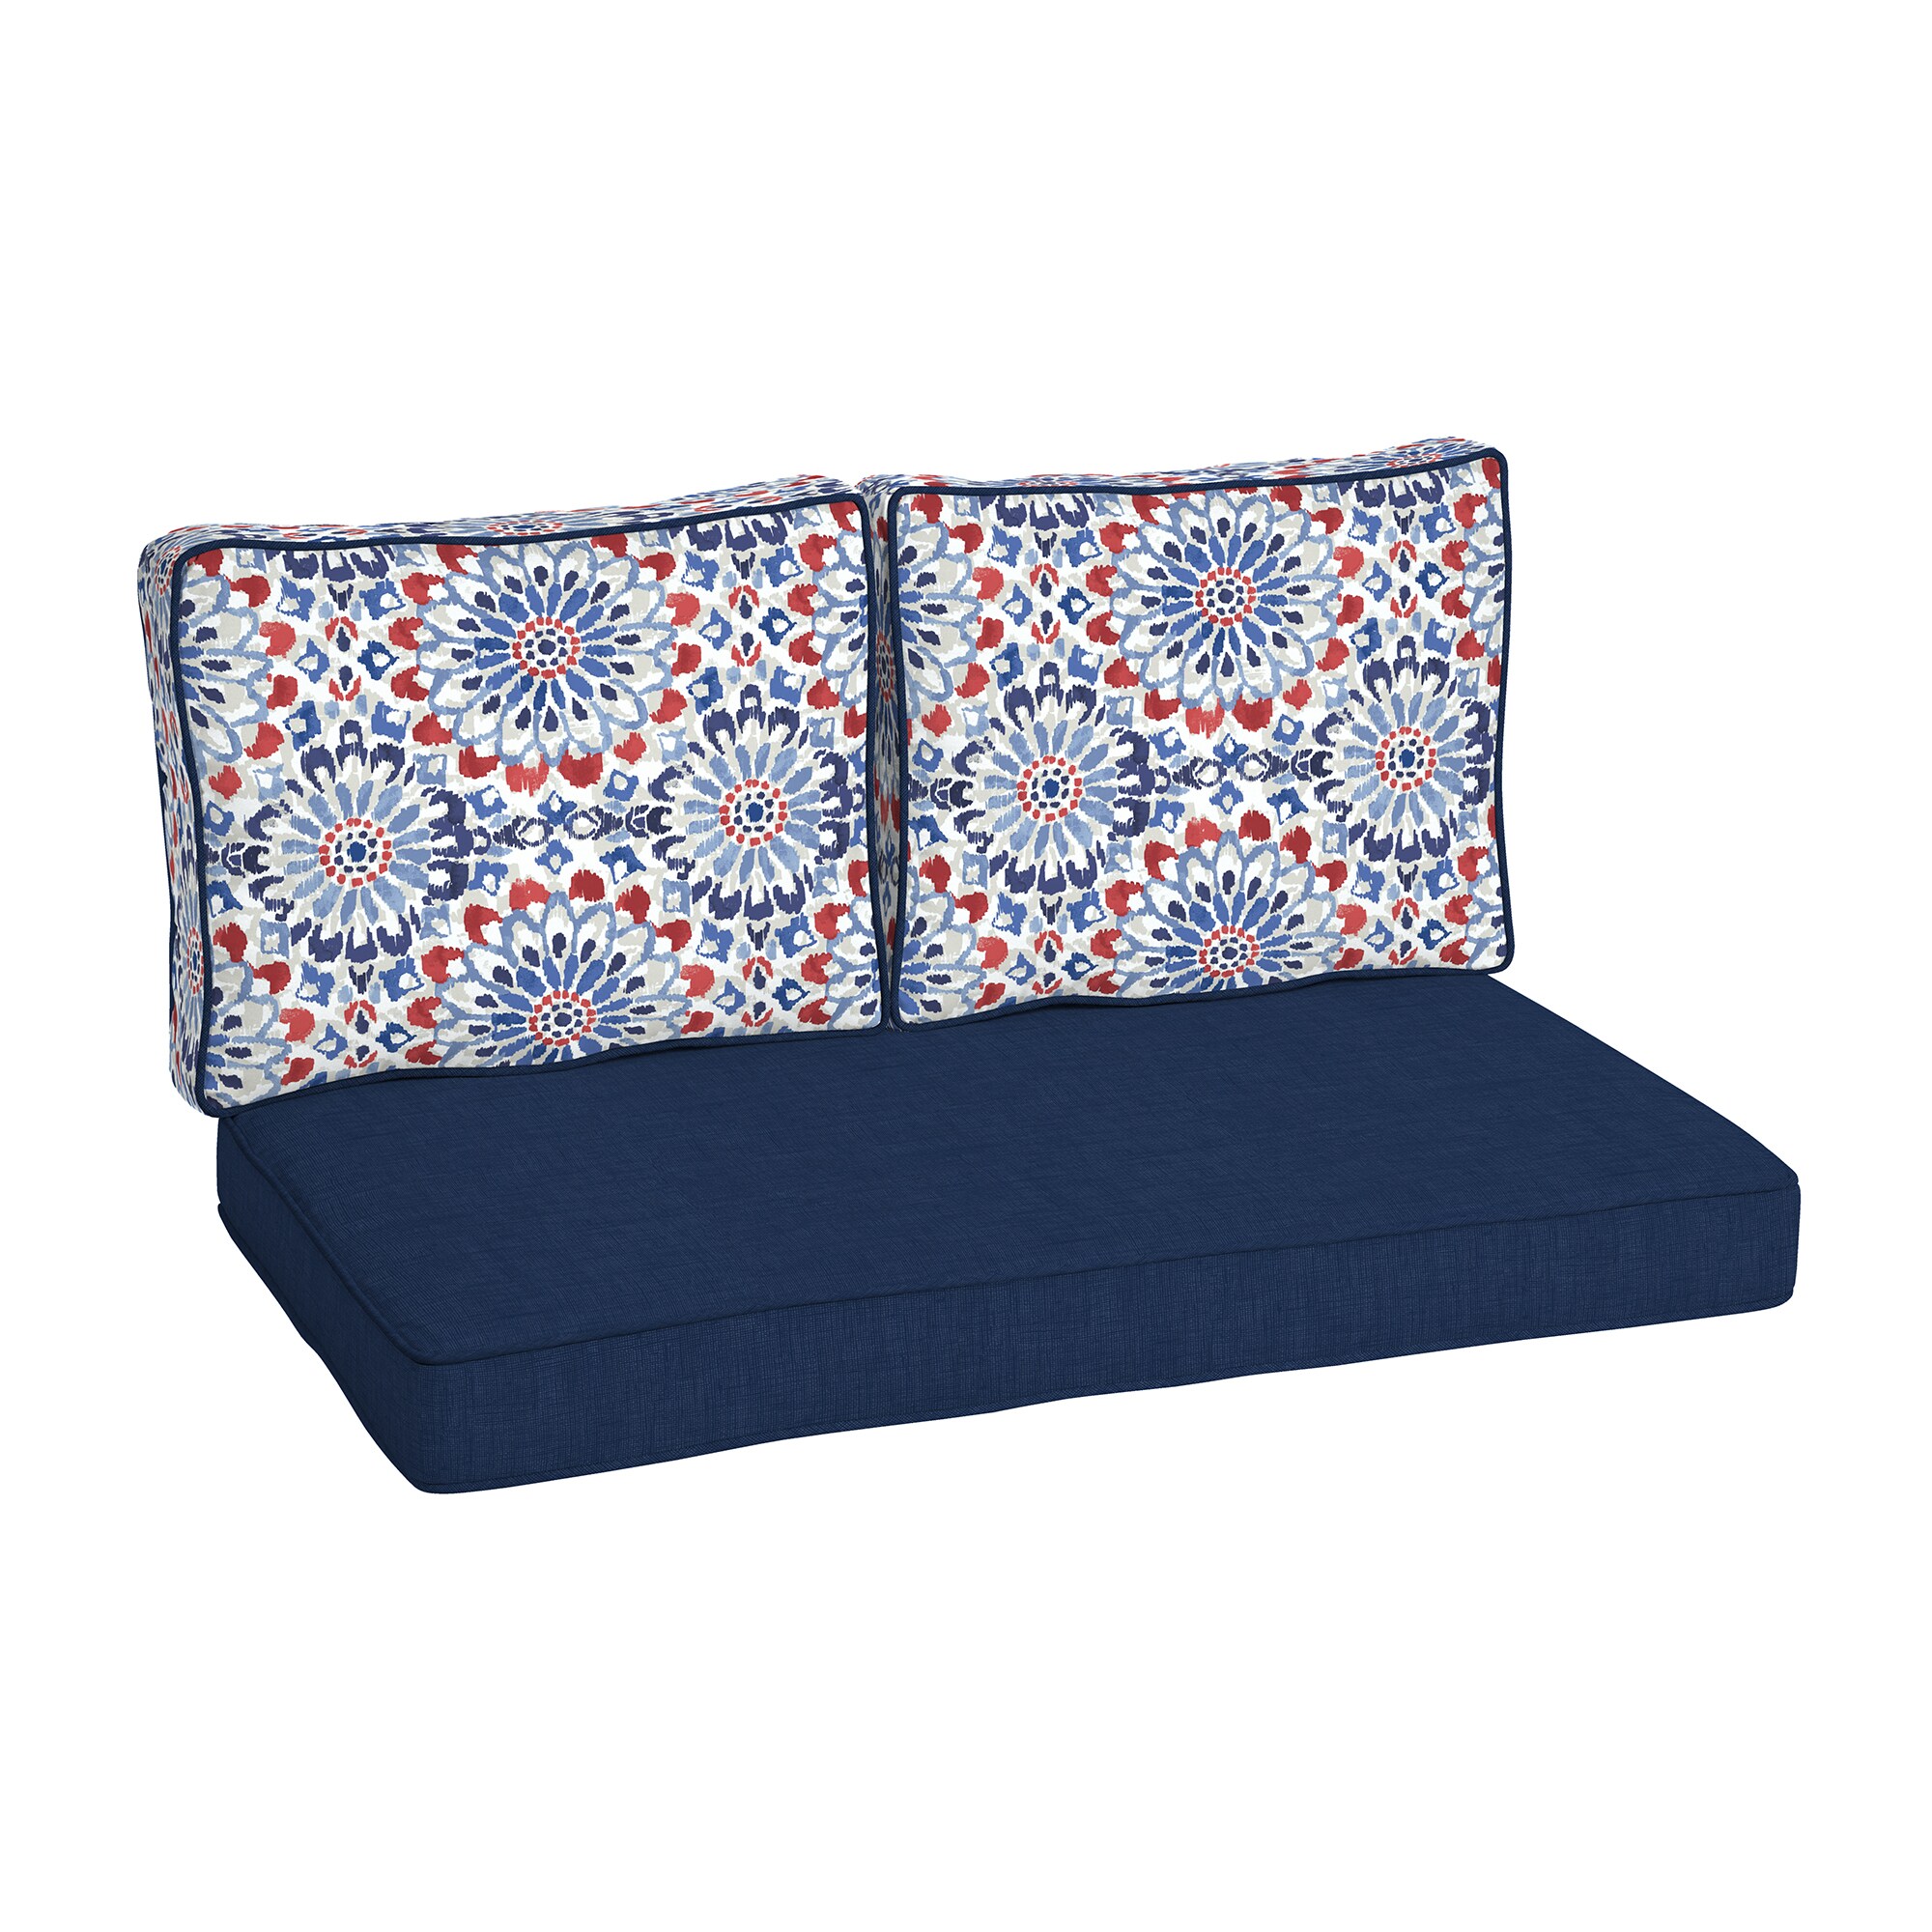 Clark Deep Seat Outdoor Cushion Set - Arden Selections